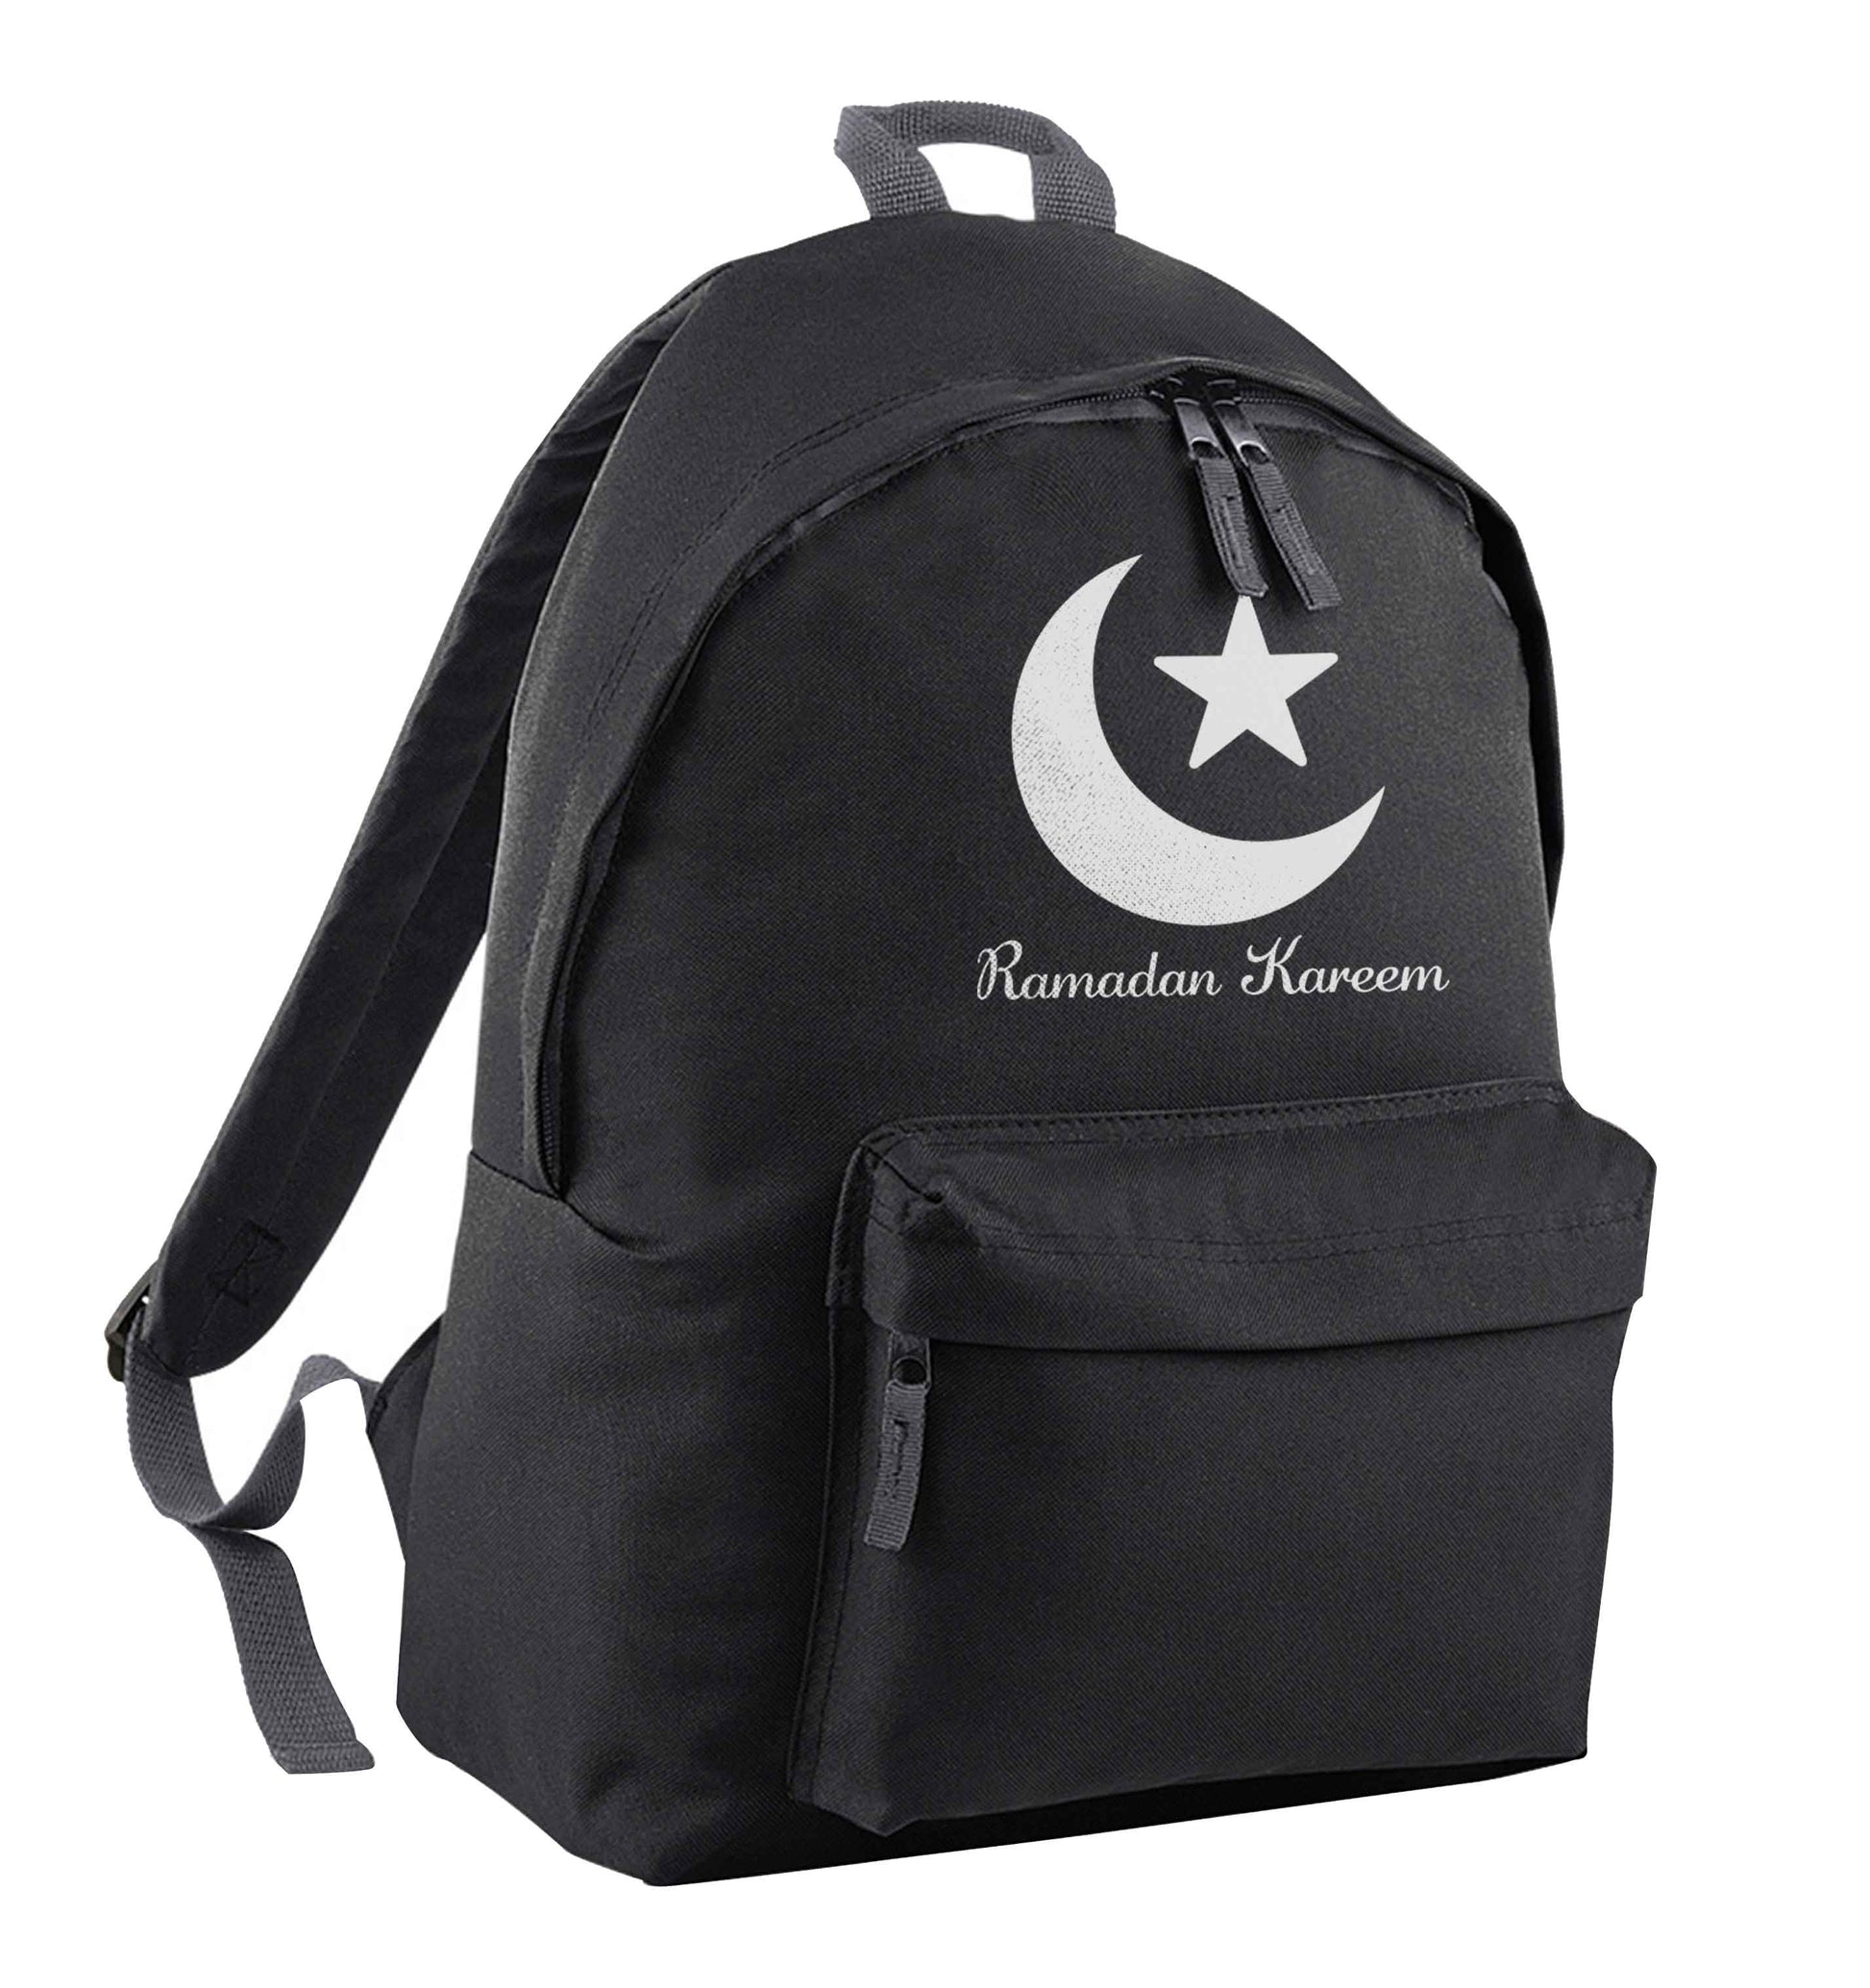 Ramadan kareem black children's backpack